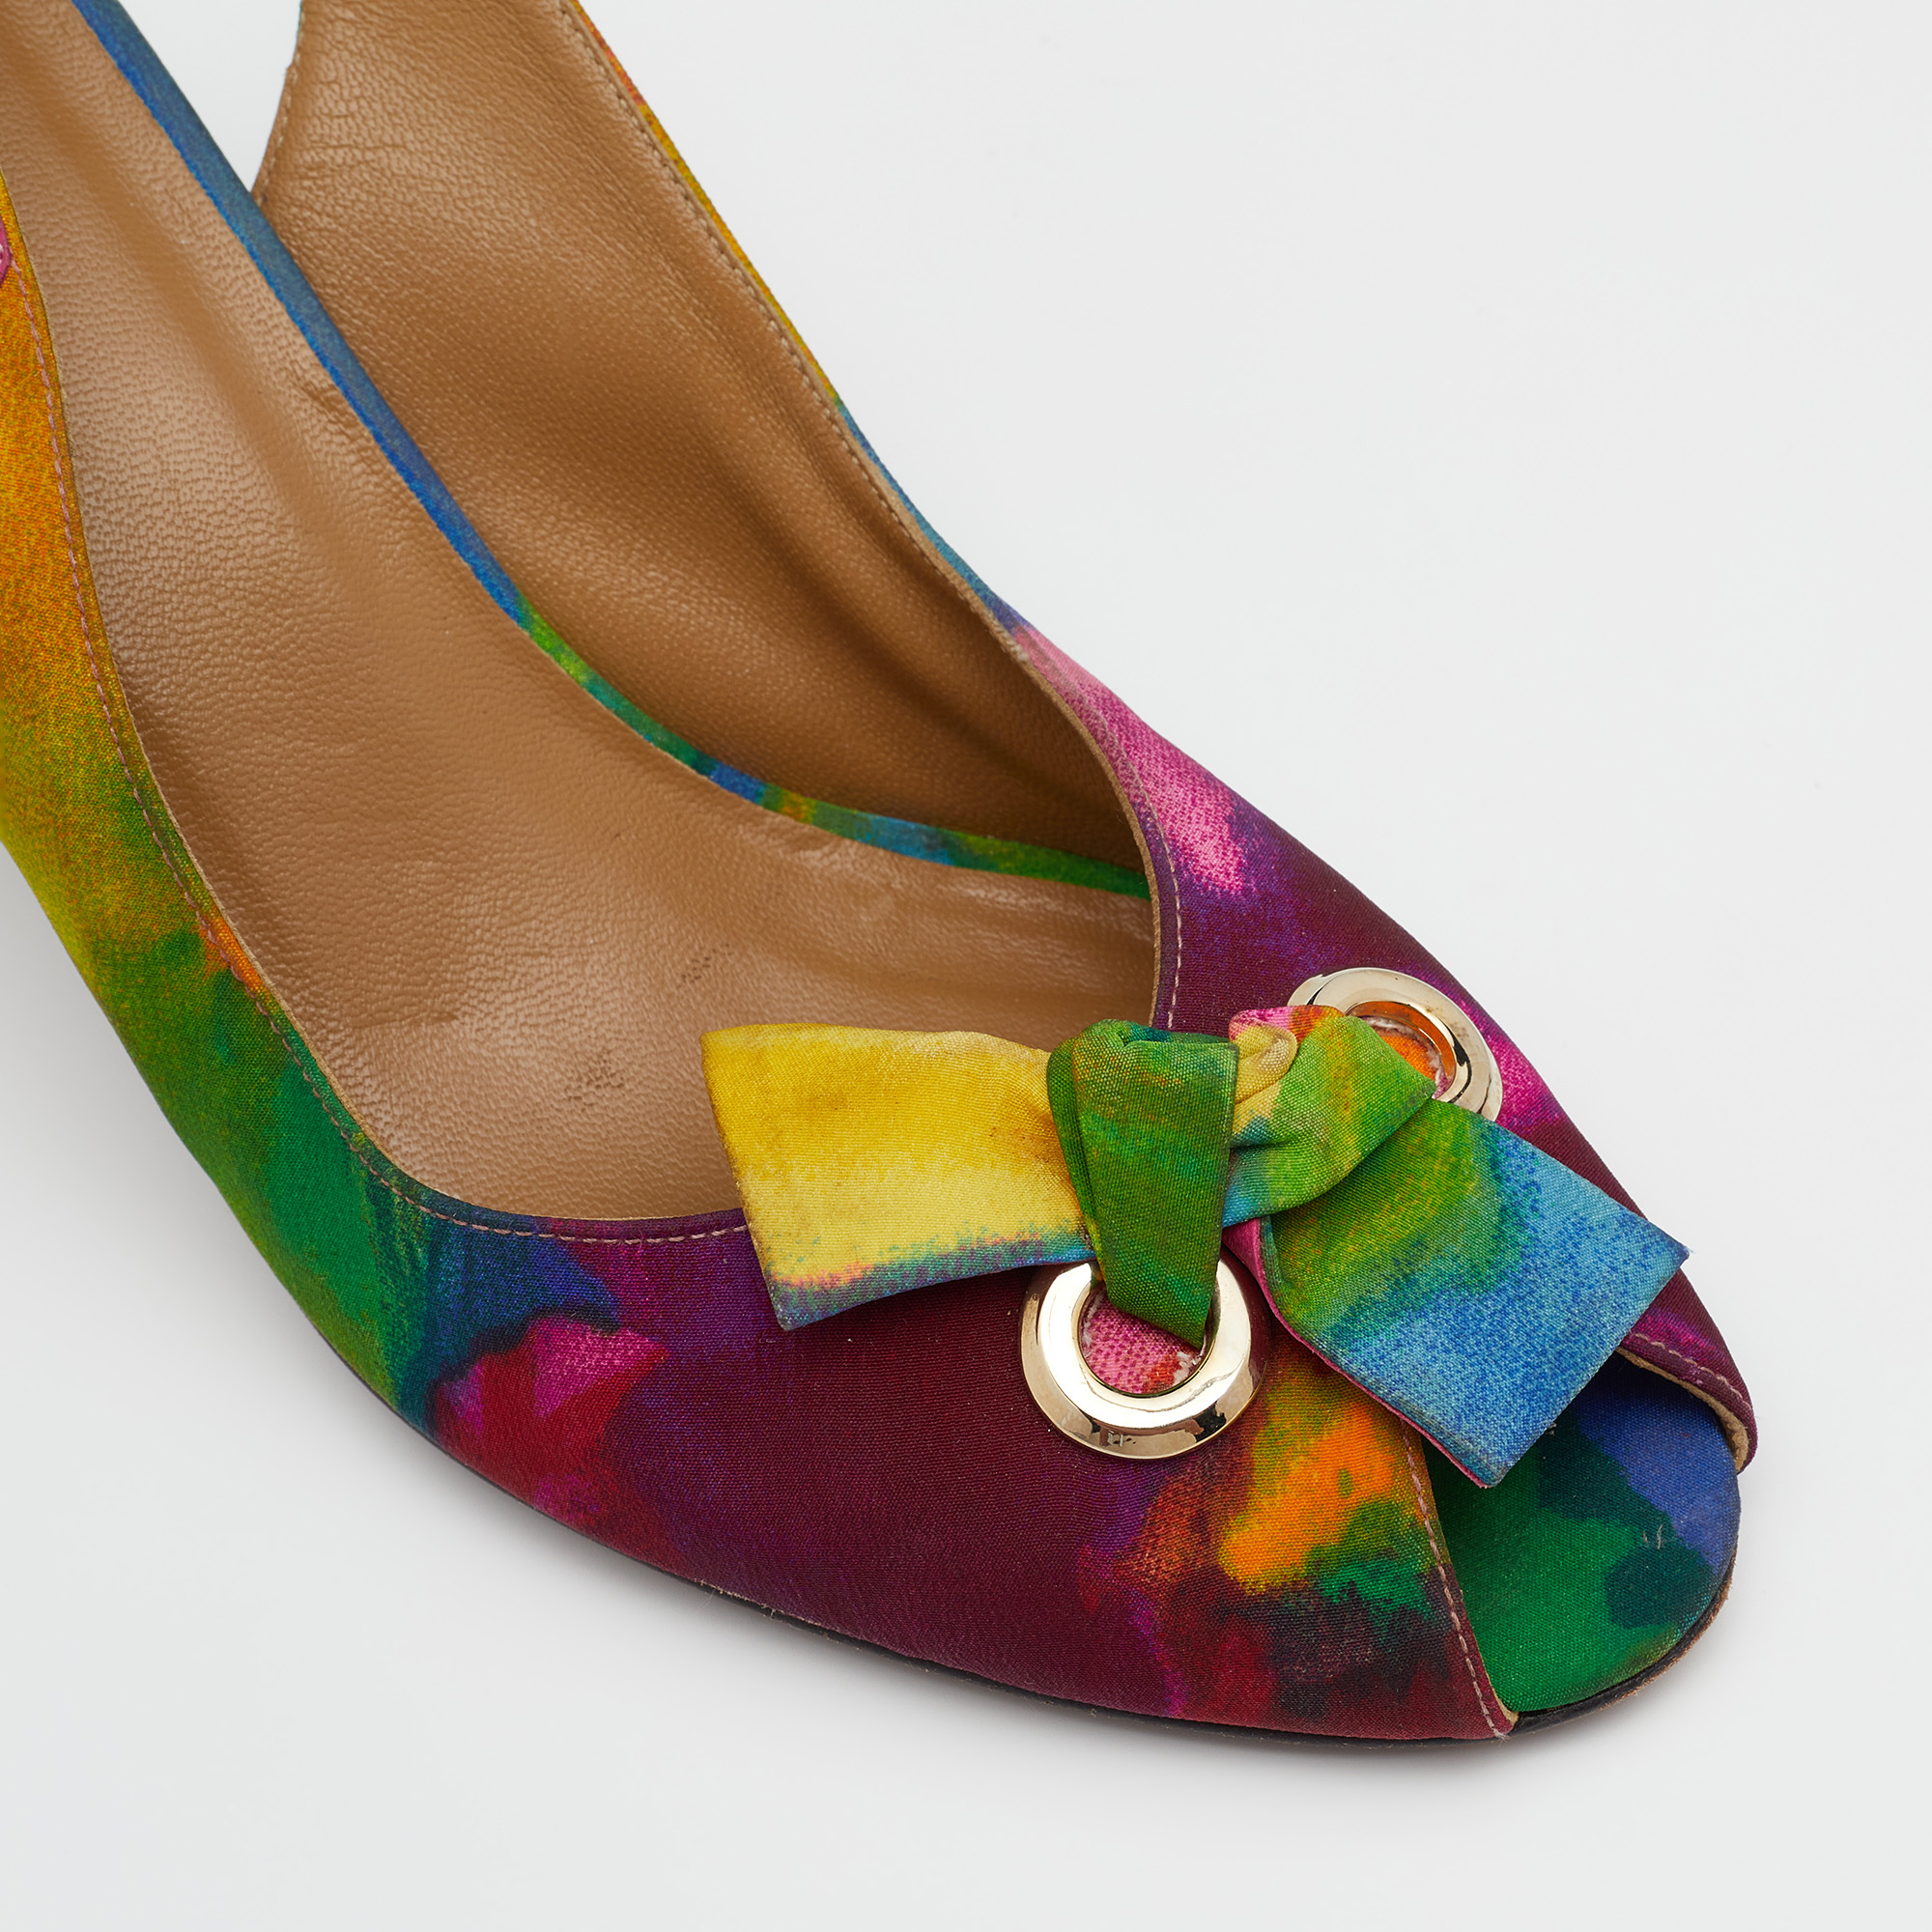 Stuart Weitzman Multicolor Fabric Peep Toe Slingback Sandals Size 40